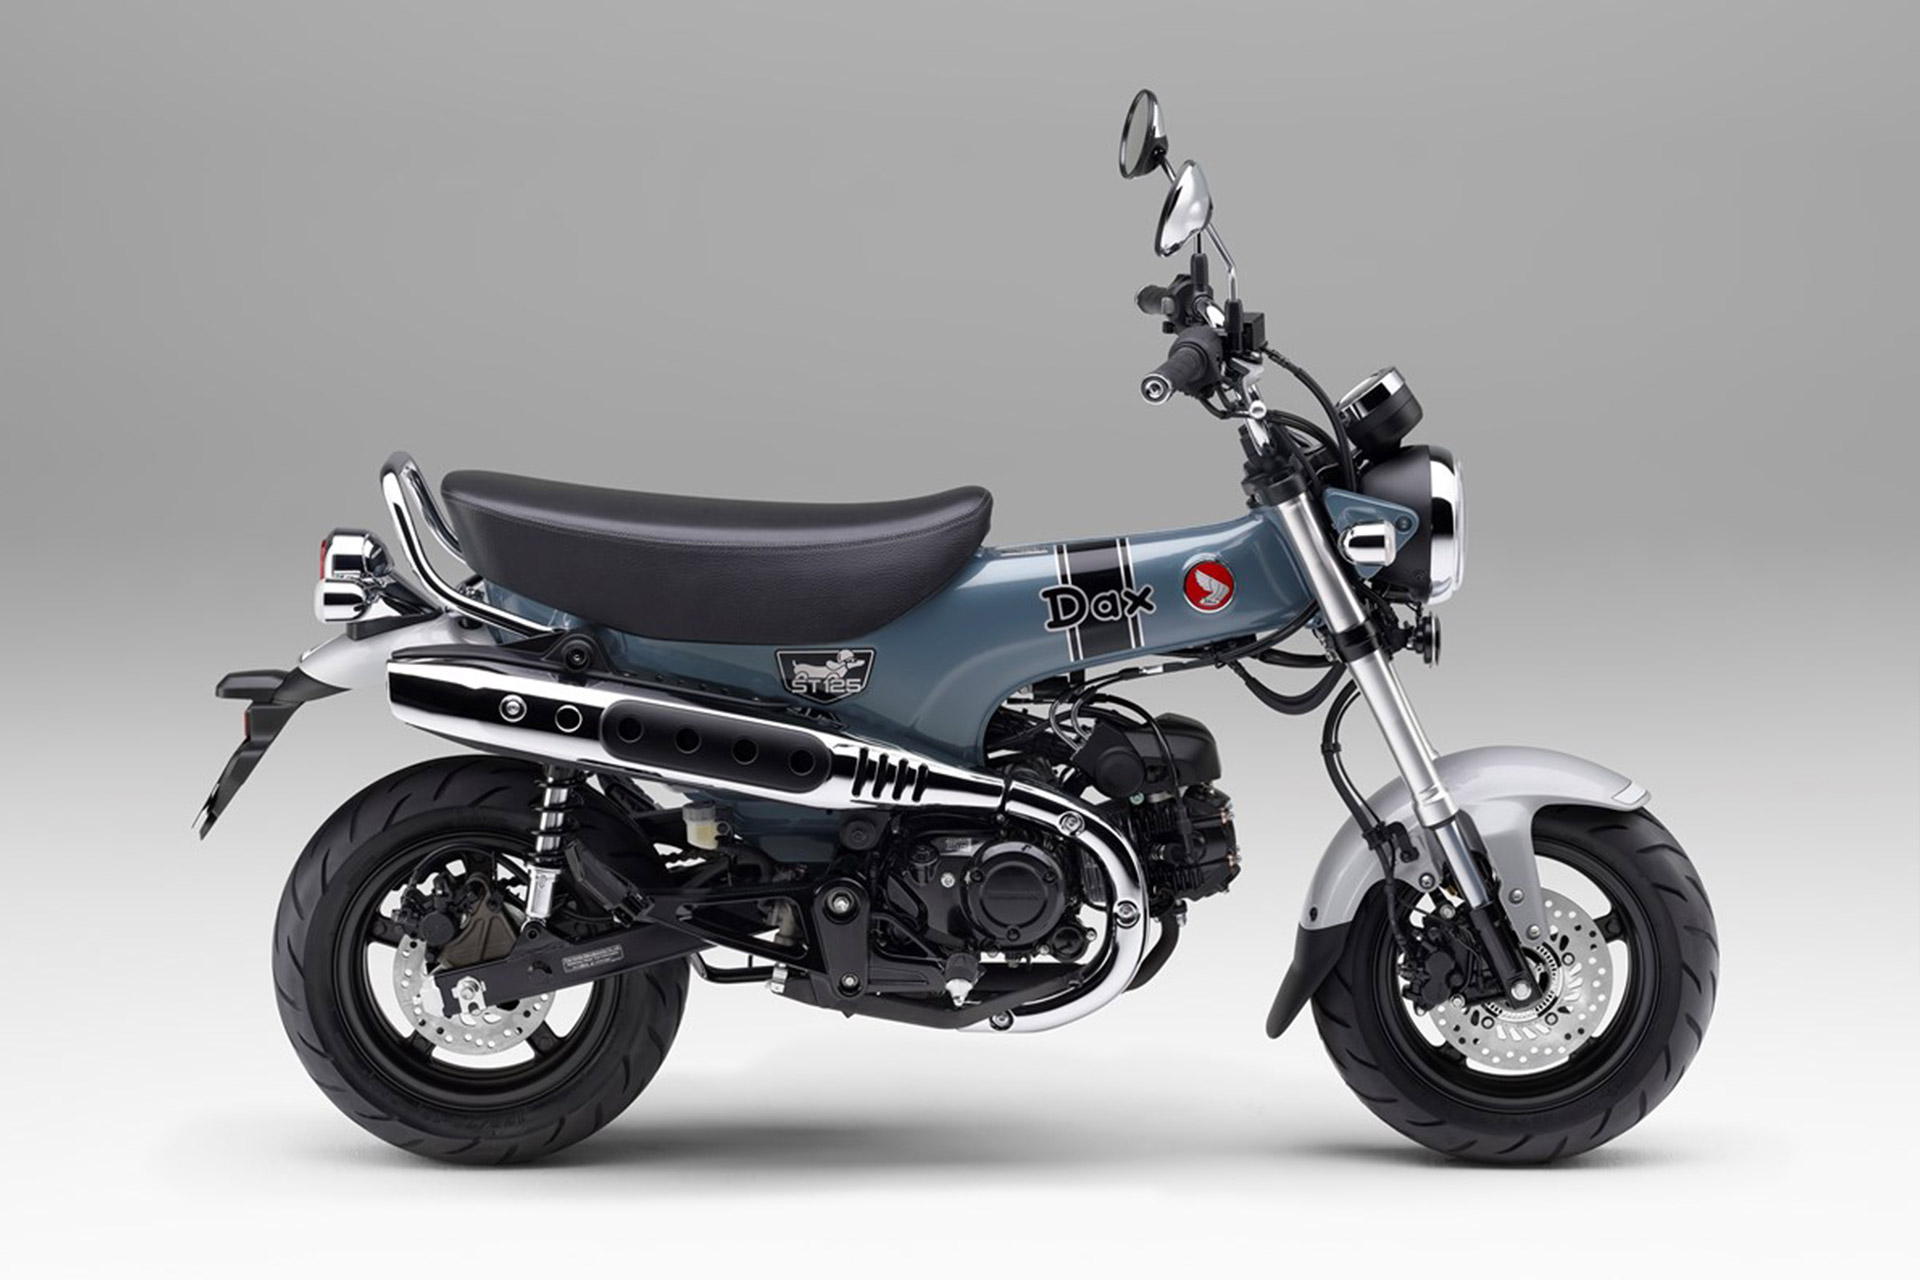 Honda S125 Dax Motorcycle Uncrate